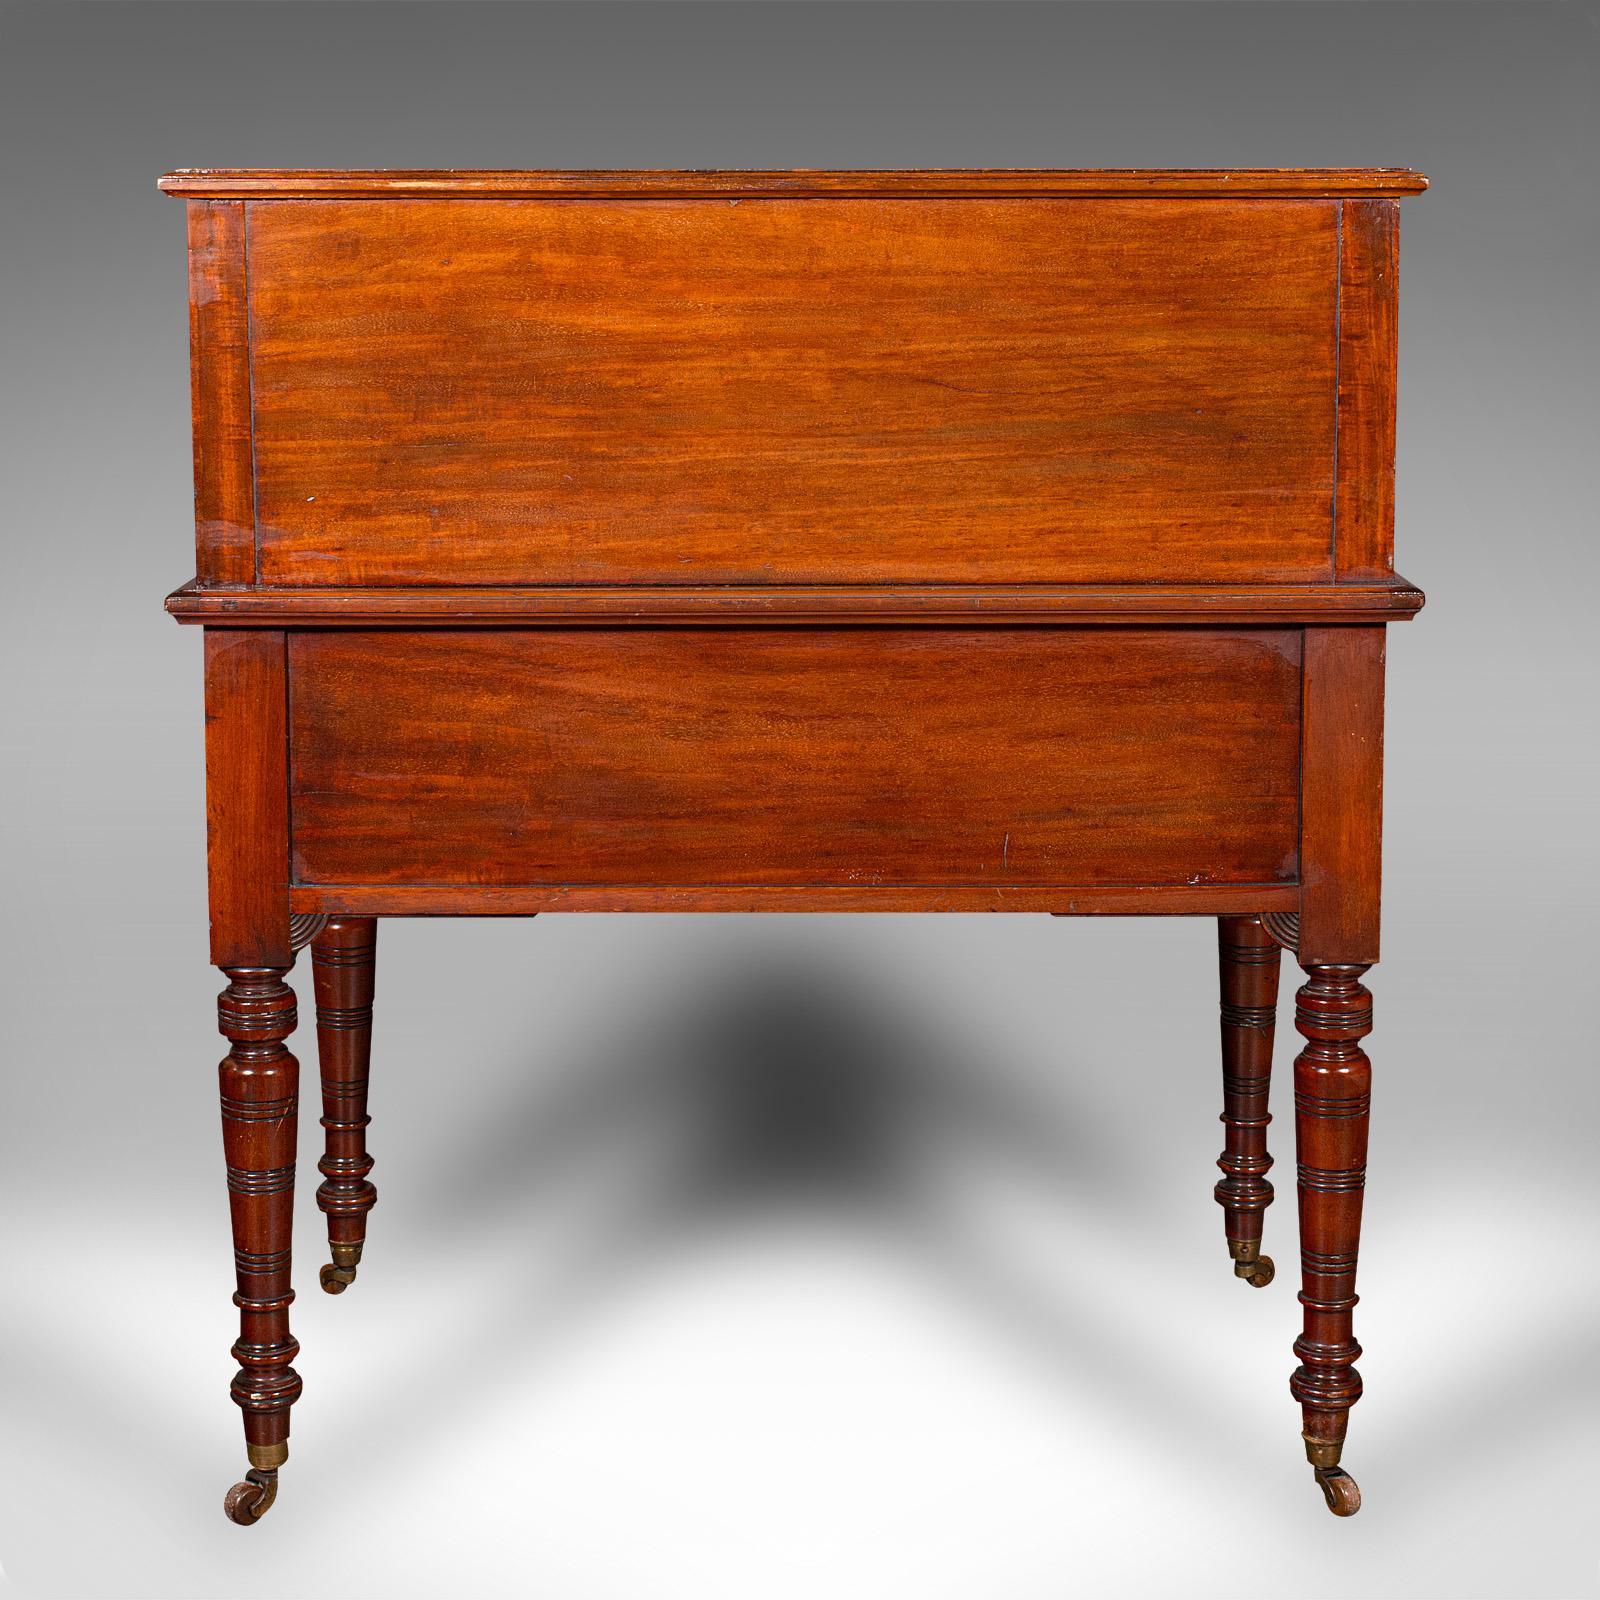 Antique Roll-Top Desk, English, Bureau, Aesthetic Period, Victorian, Circa 1880 For Sale 1